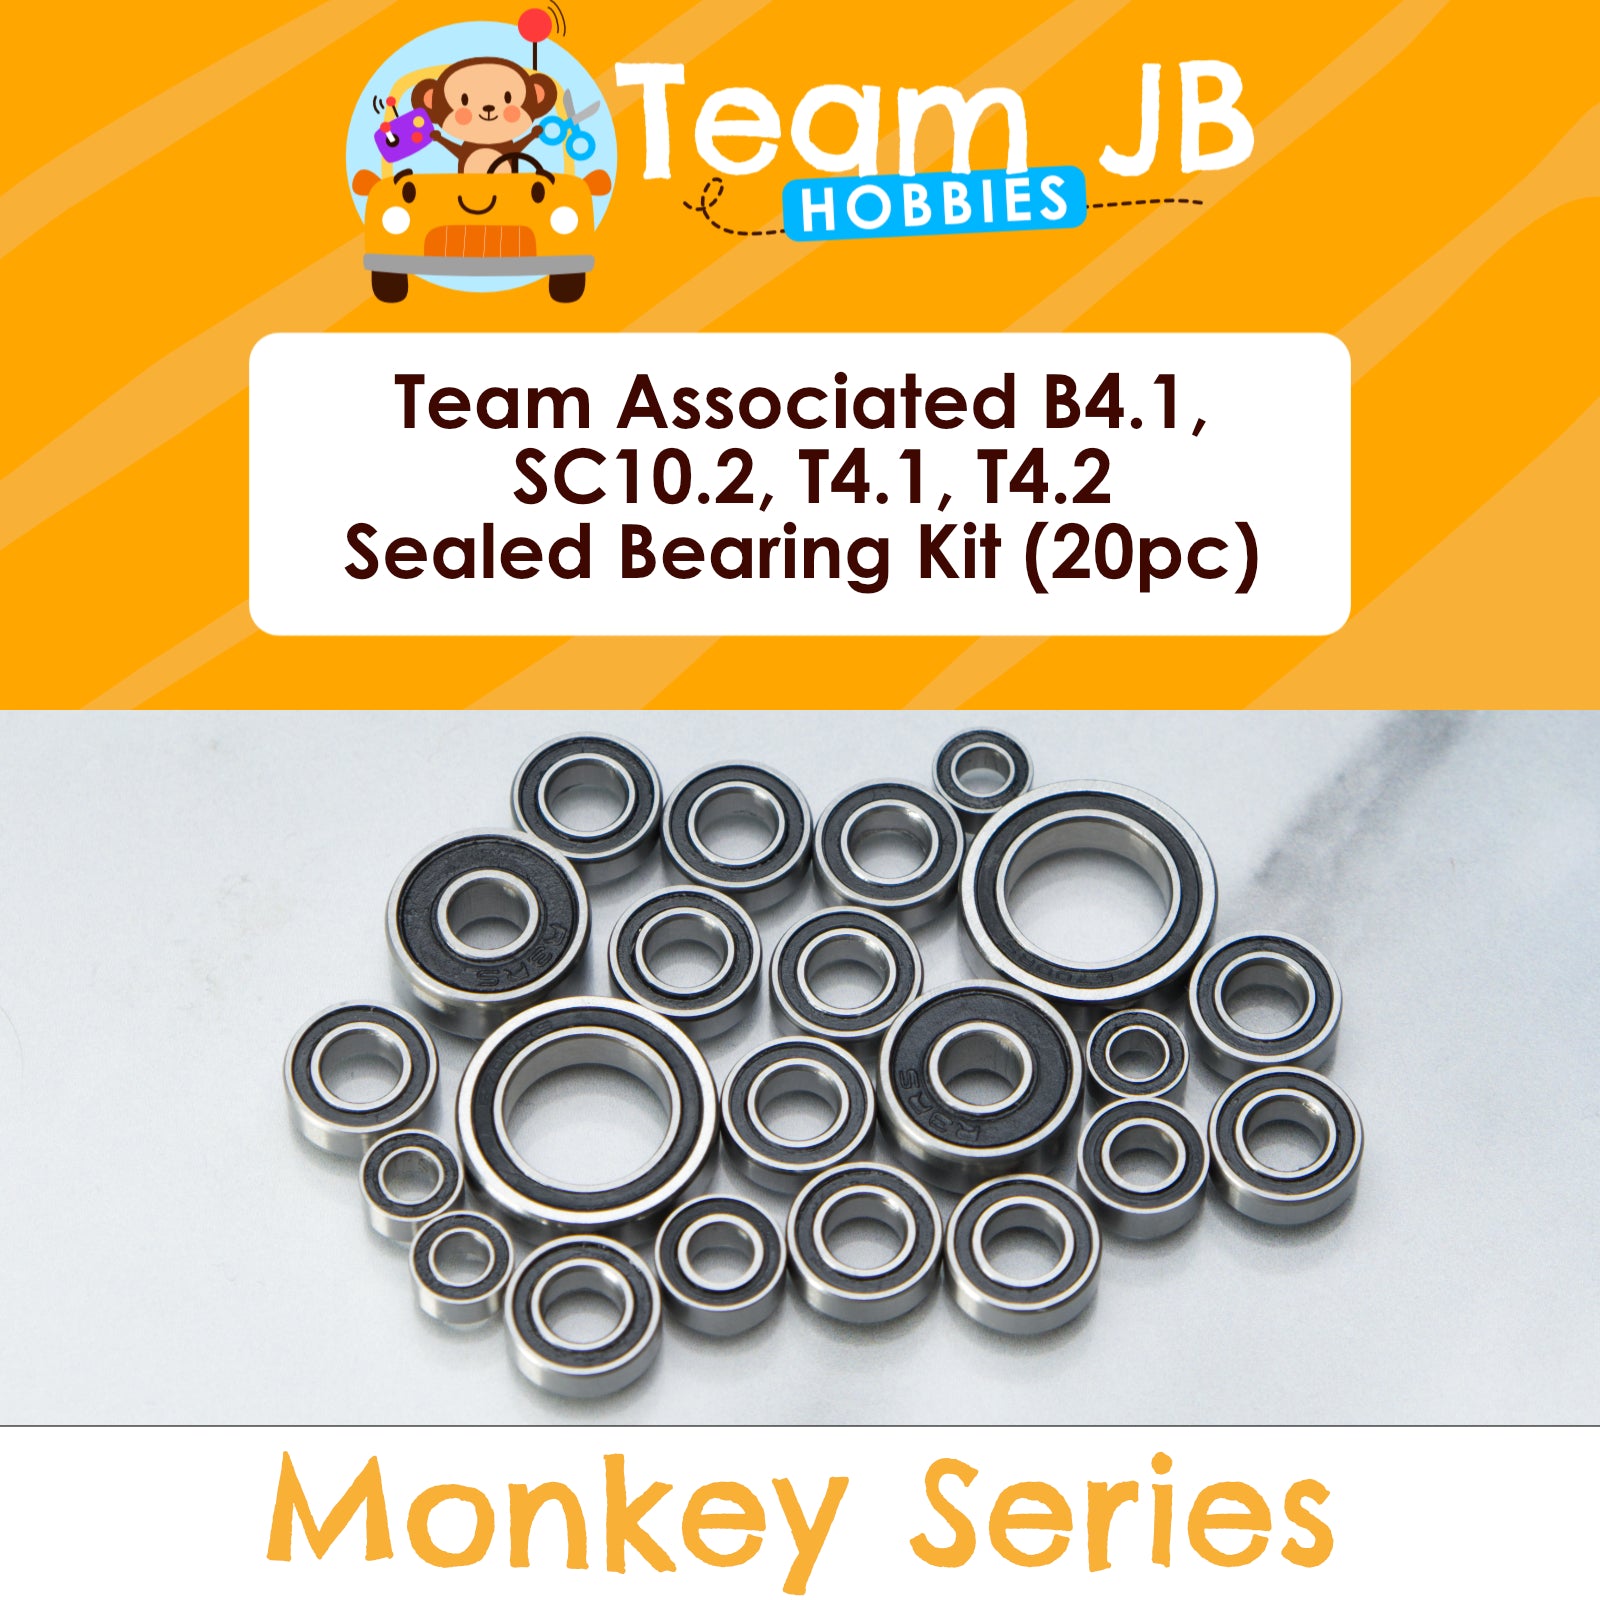 Team Associated B4.1 Factory Team, B4.1 Worlds Car Kit, SC10.2, T4.1, T4.2 - Sealed Bearing Kit